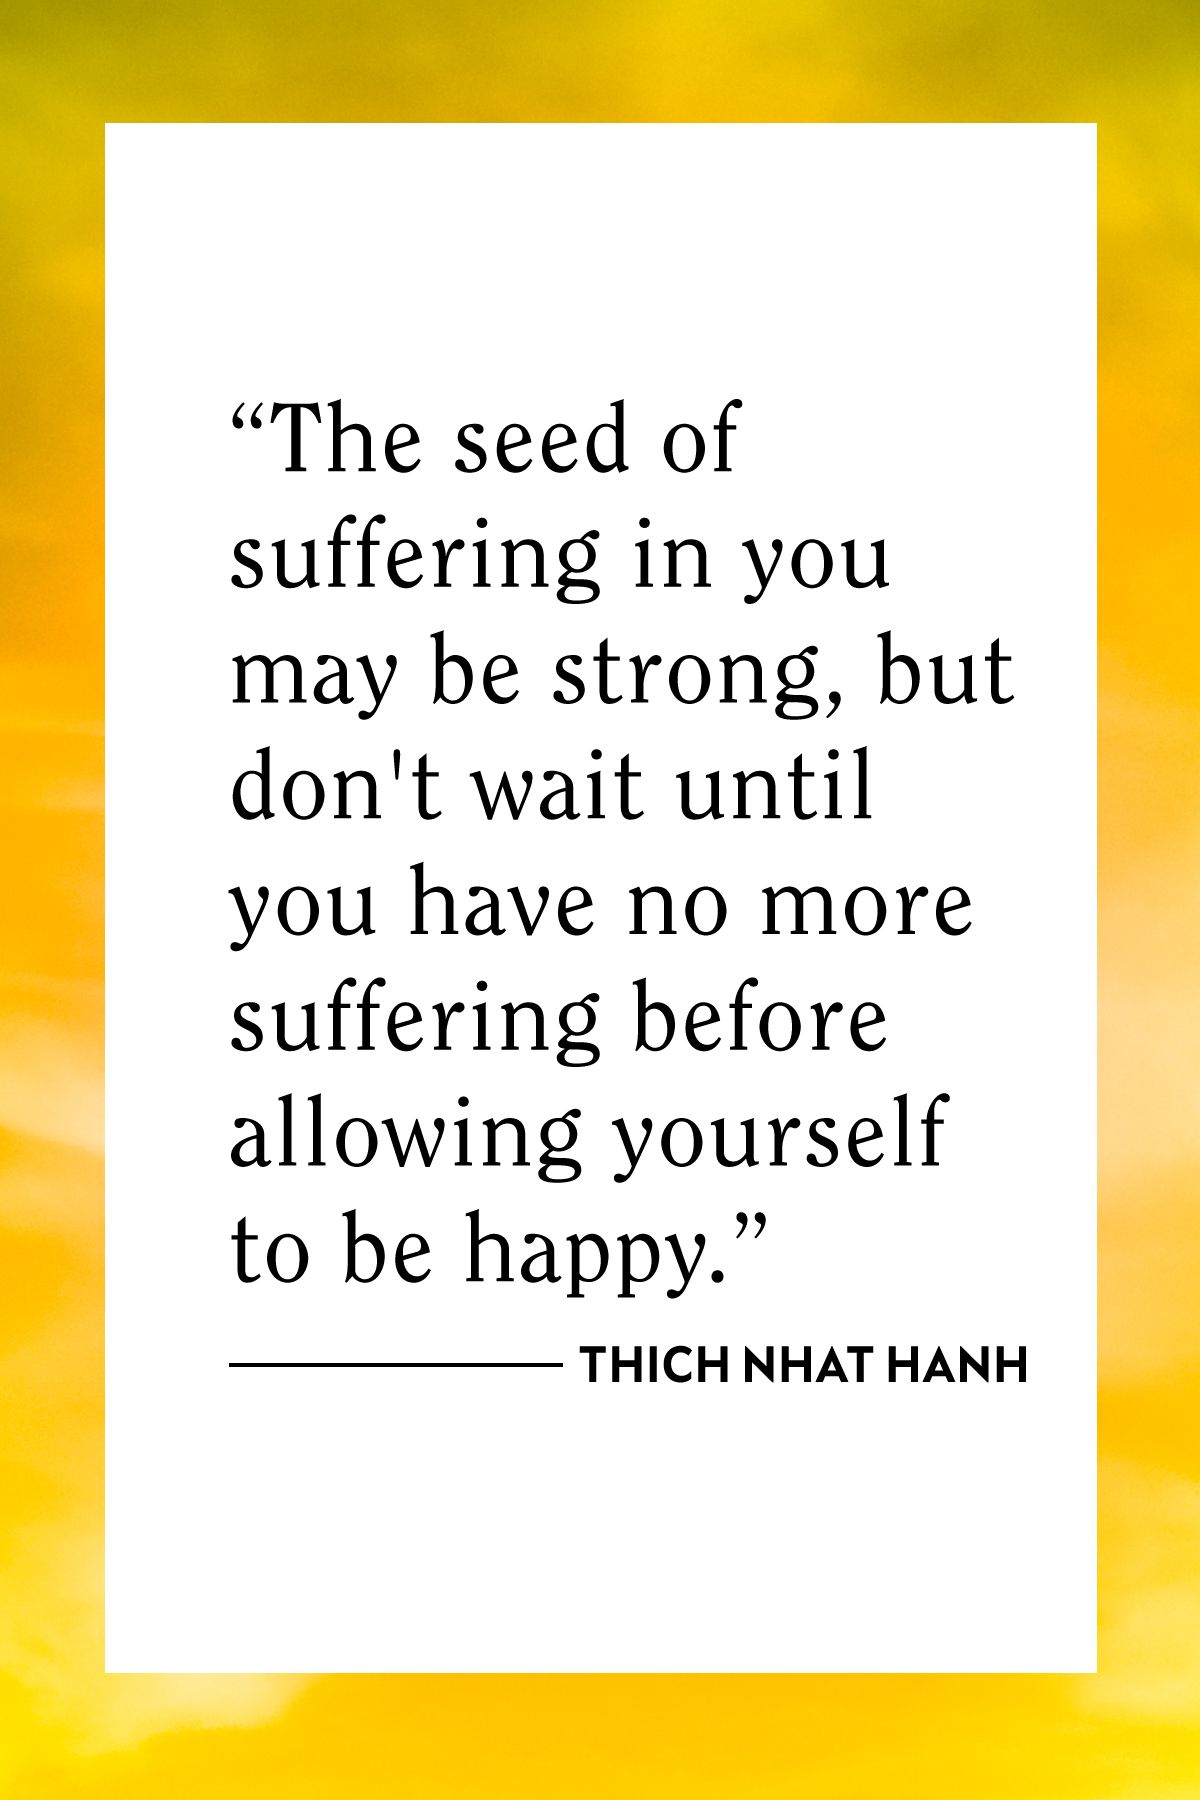 100 Thich Nhat Hanh سۆزى (ئازاب-ئوقۇبەت ، خۇشاللىق ۋە قويۇپ بېرىش)